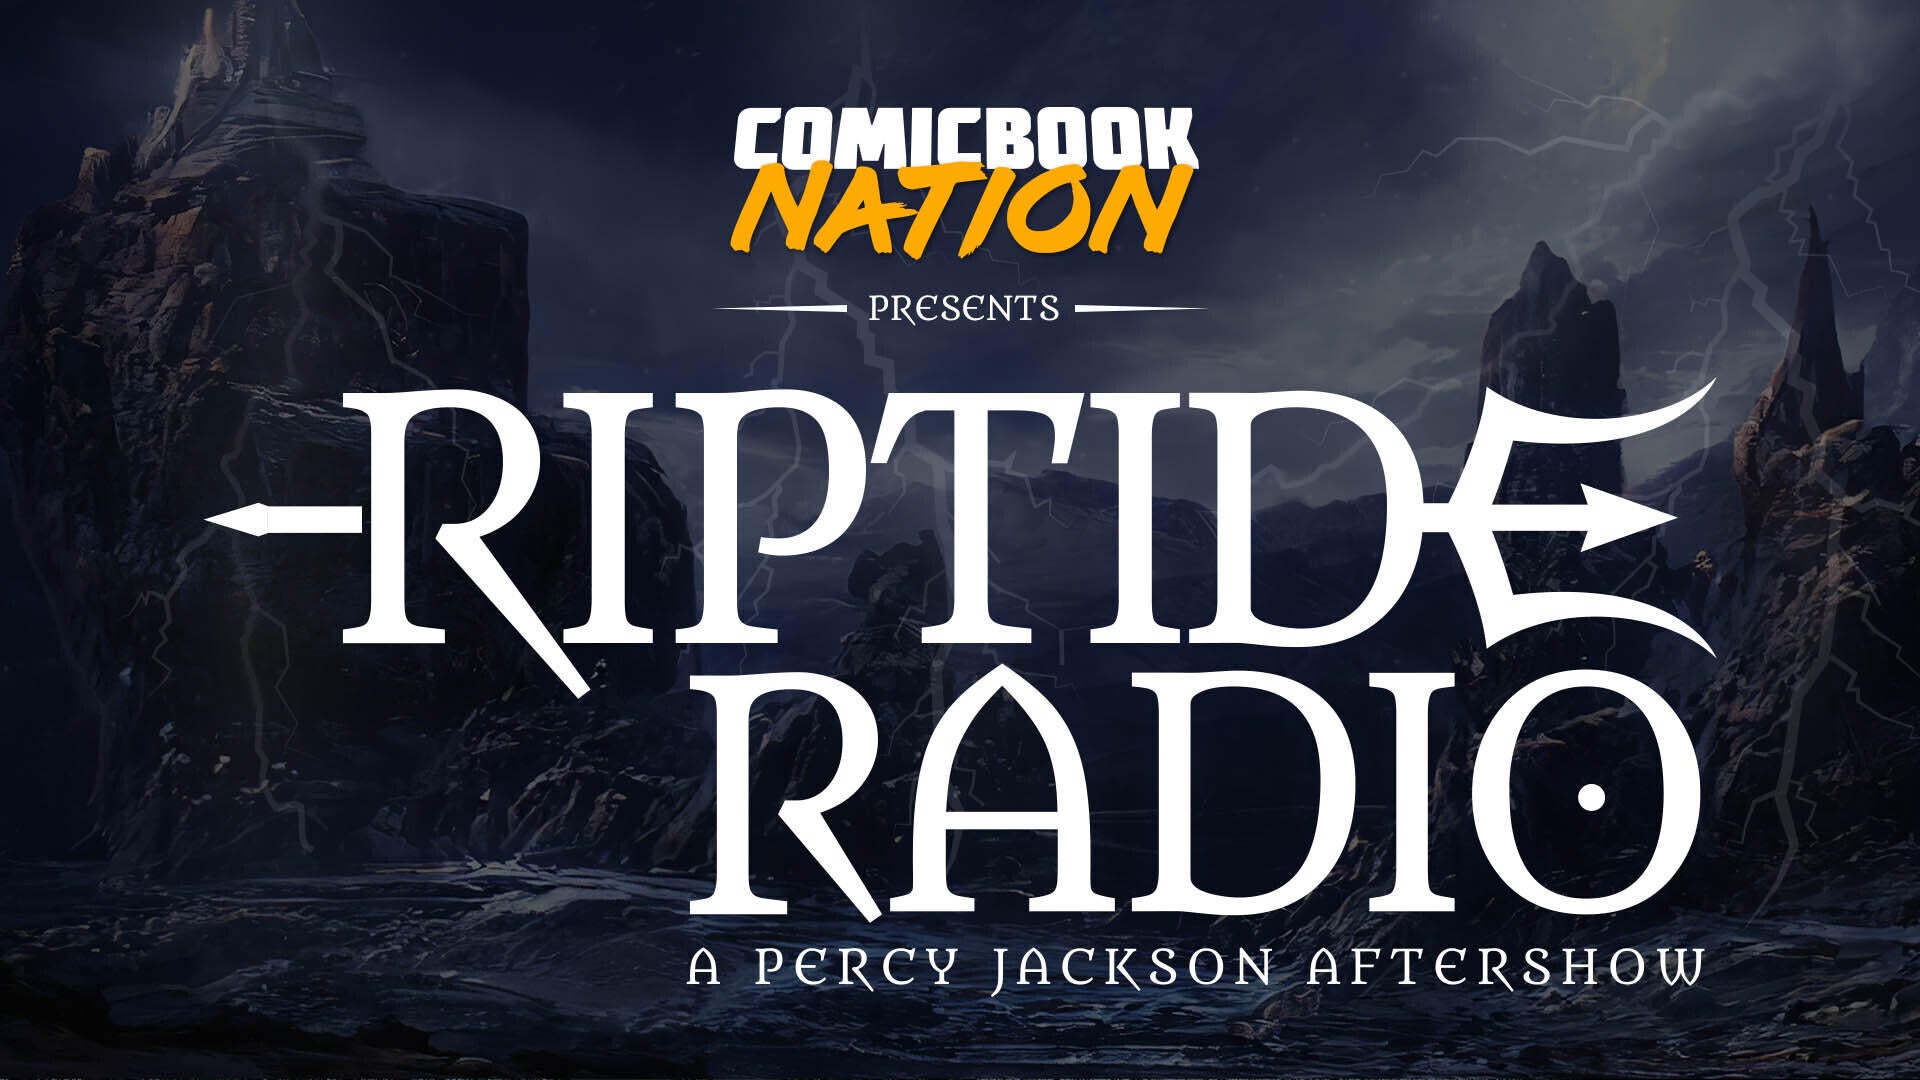 RIPTIDE RADIO PERCY JACKSON COMICBOOK NATION LOGO